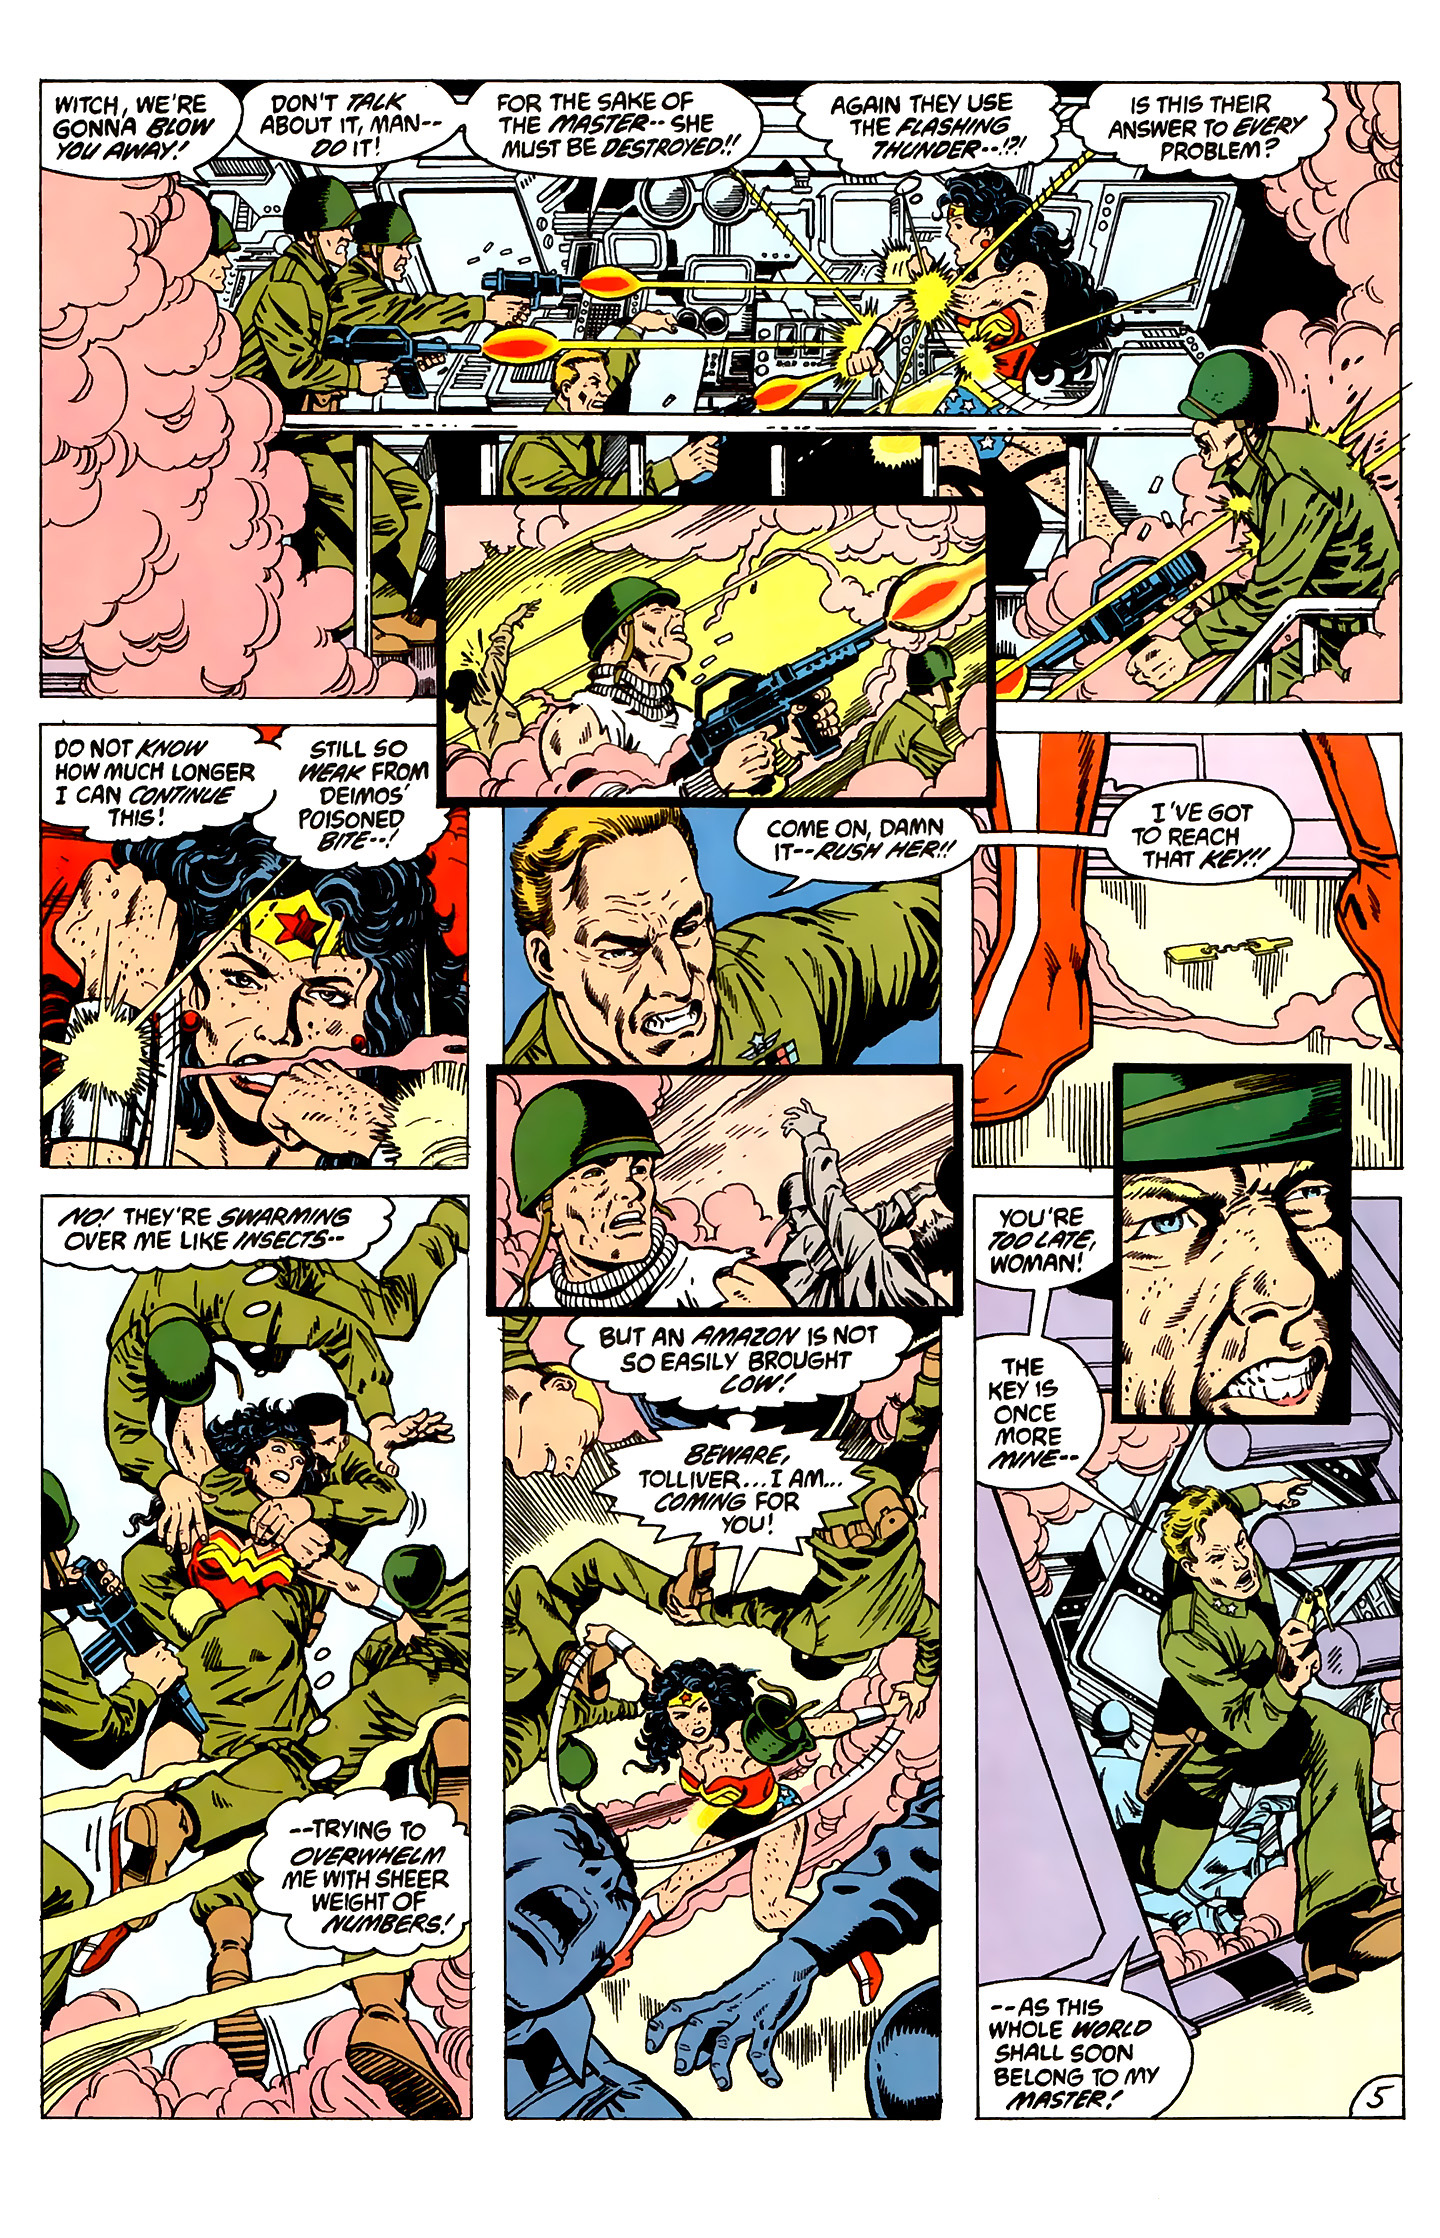 Wonder Woman (1987) 6 Page 5